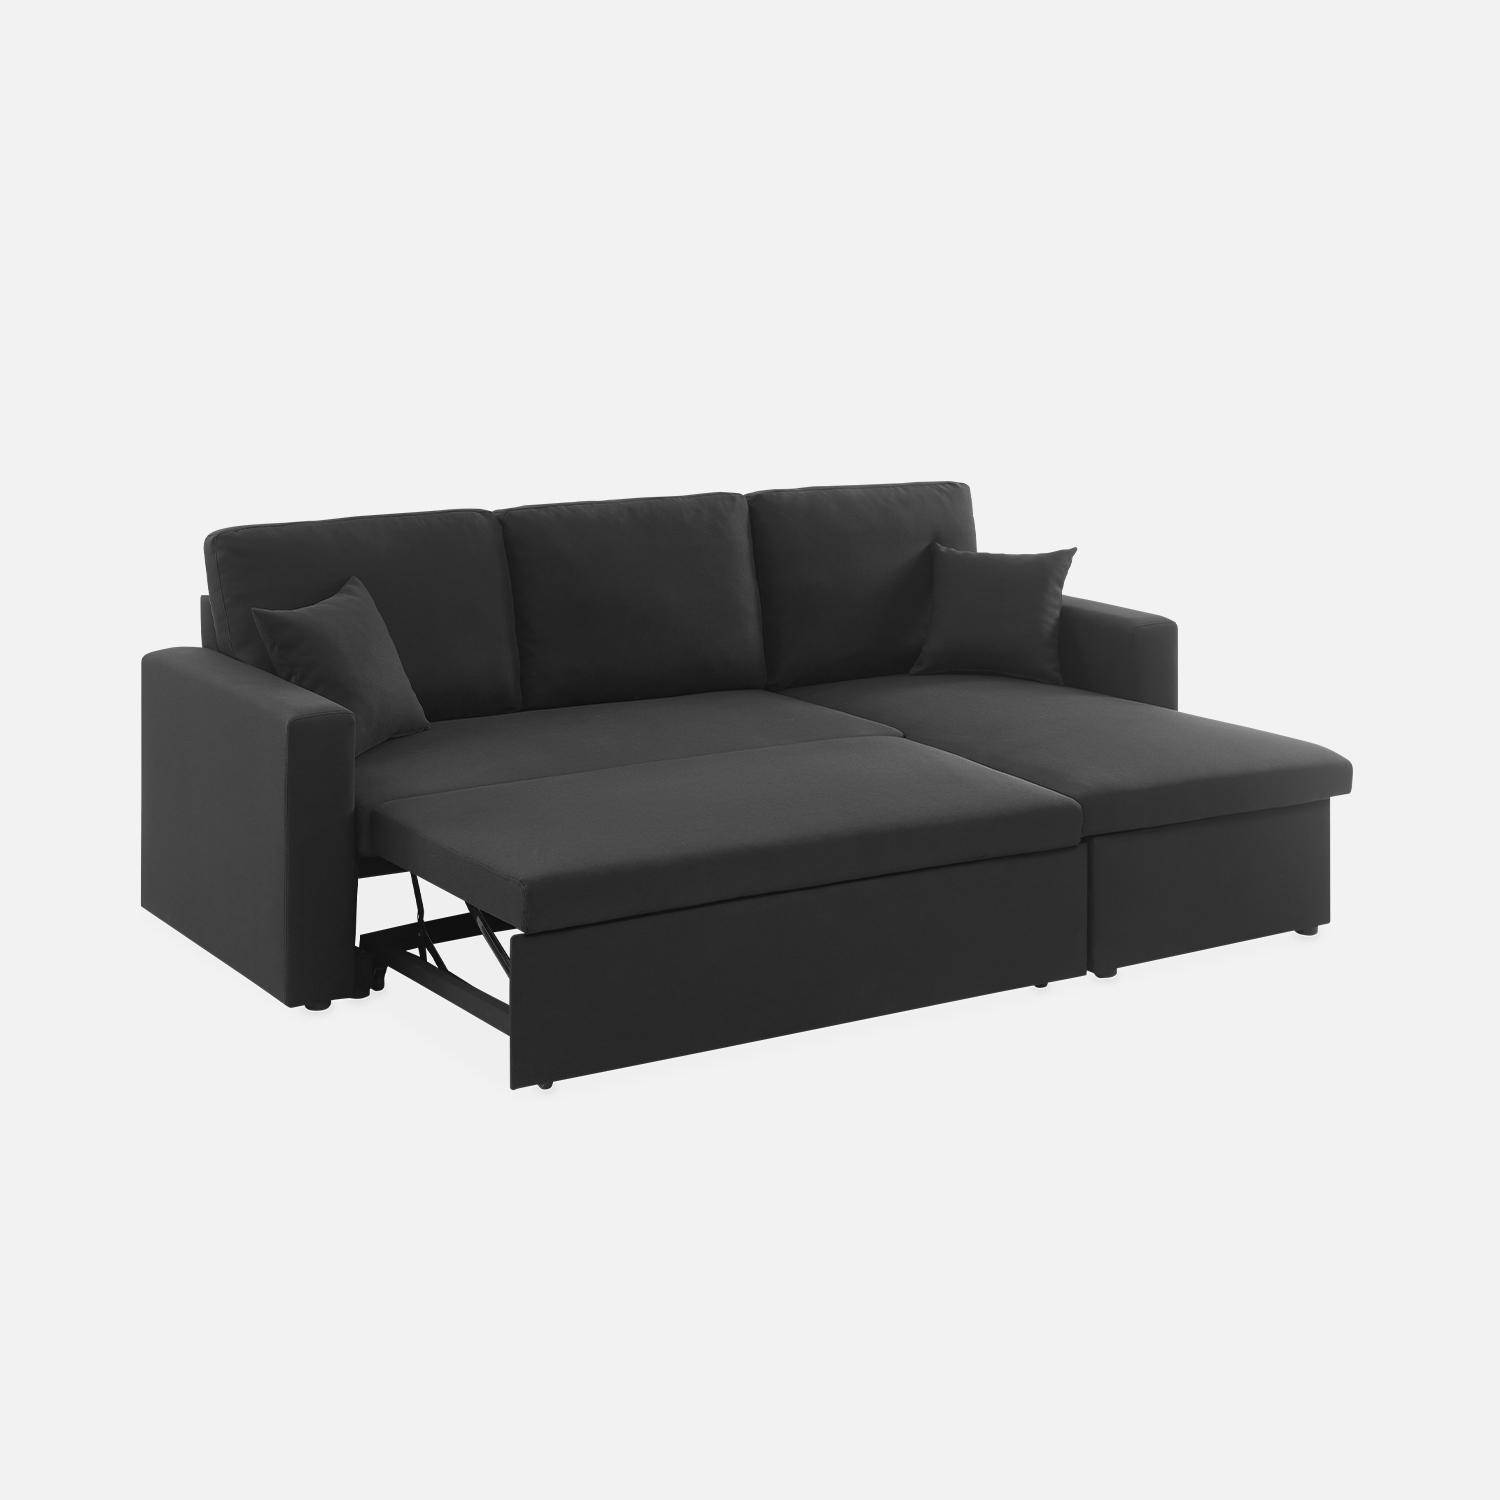 3-seater reversible black corner sofa bed with storage box, black L219xD81xH68cm, IDA,sweeek,Photo9